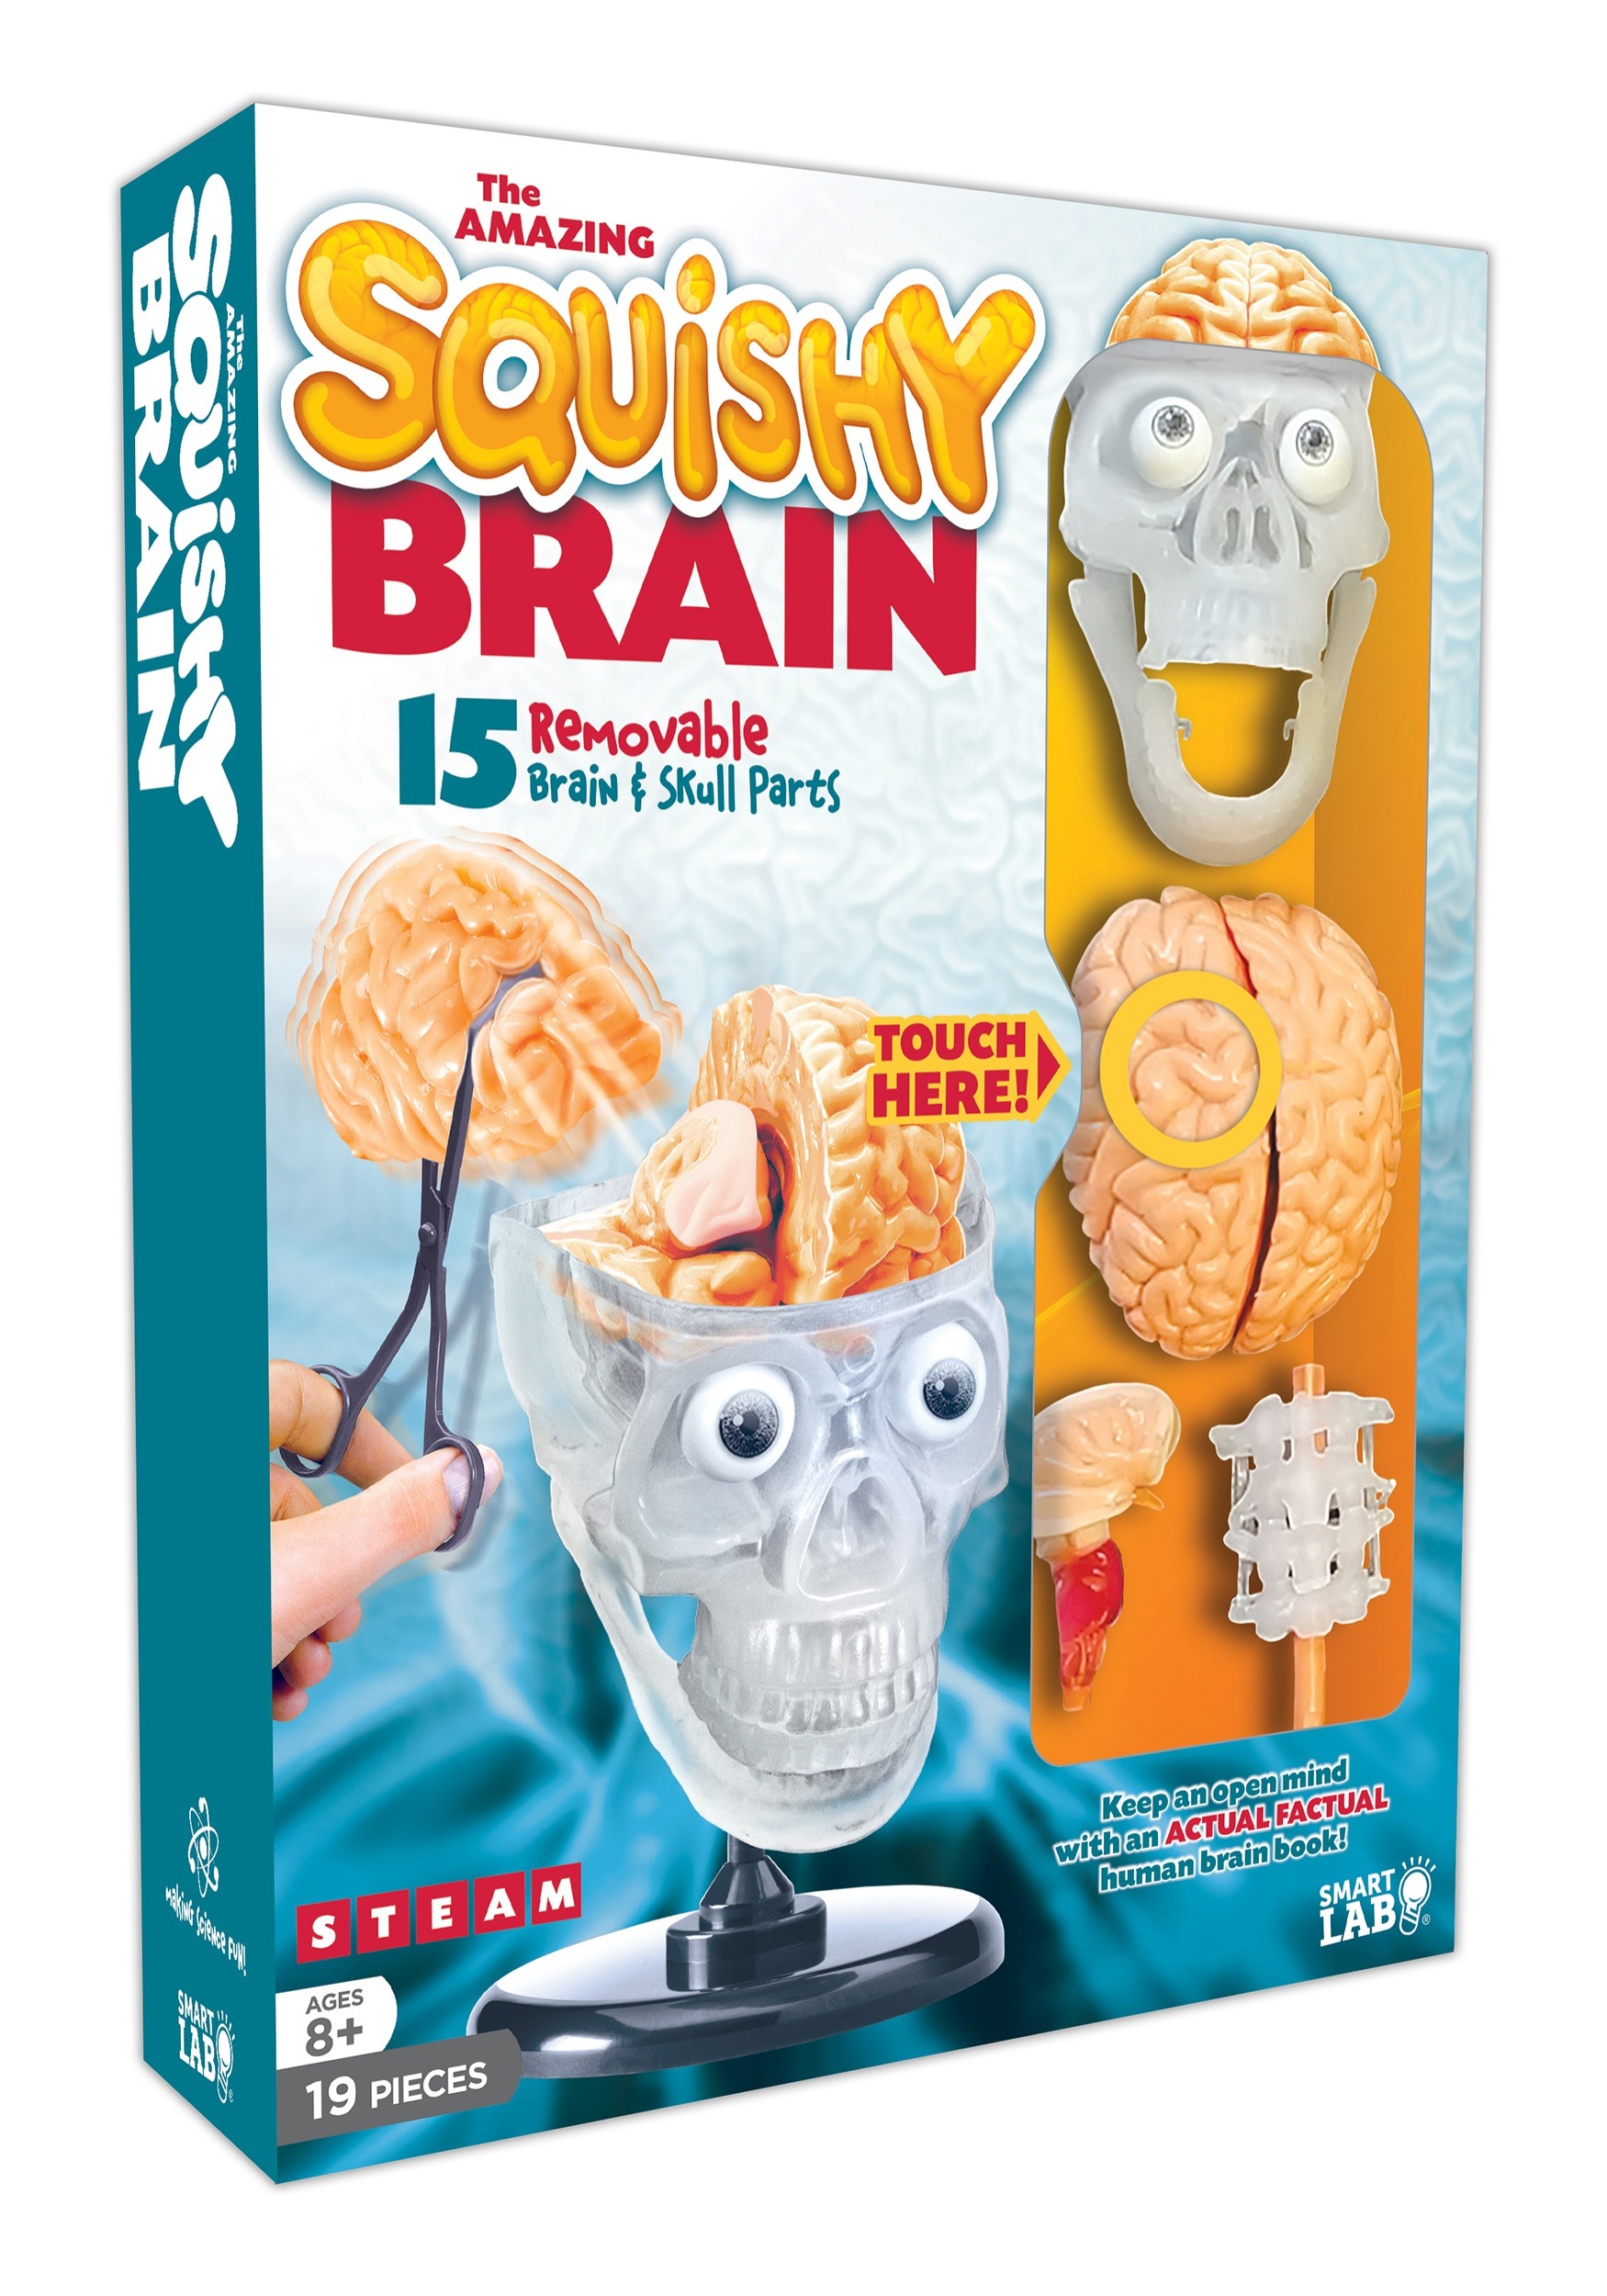 The Amazing Squishy Brain SmartLab Toys